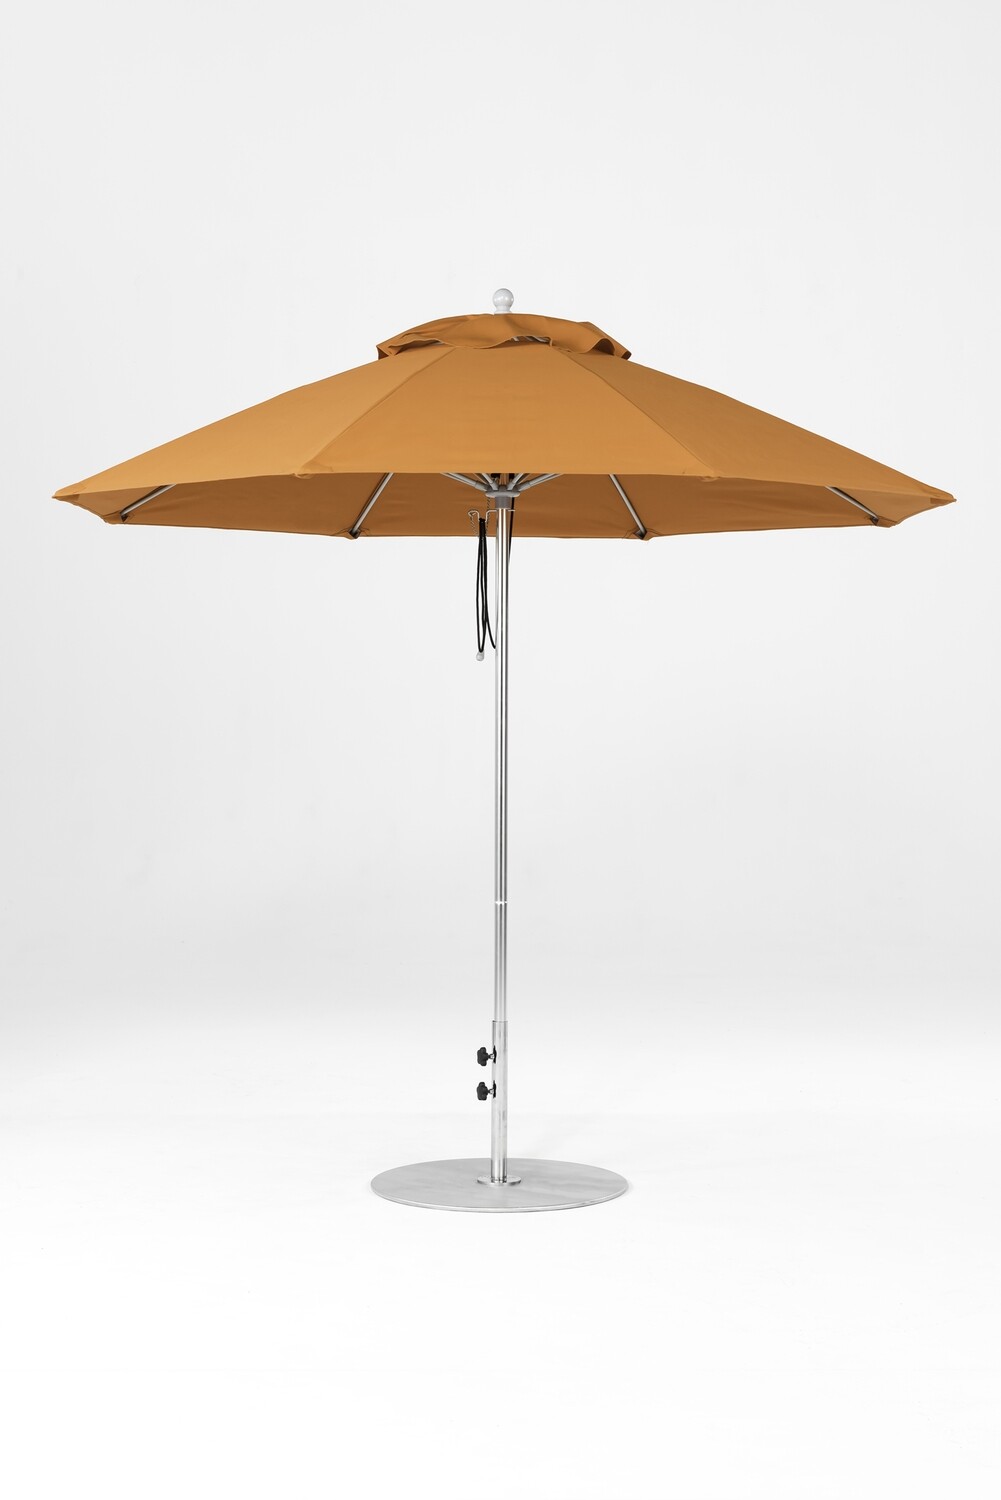 Monterey Round  Fiberglass Market Umbrella with Pulley Lift